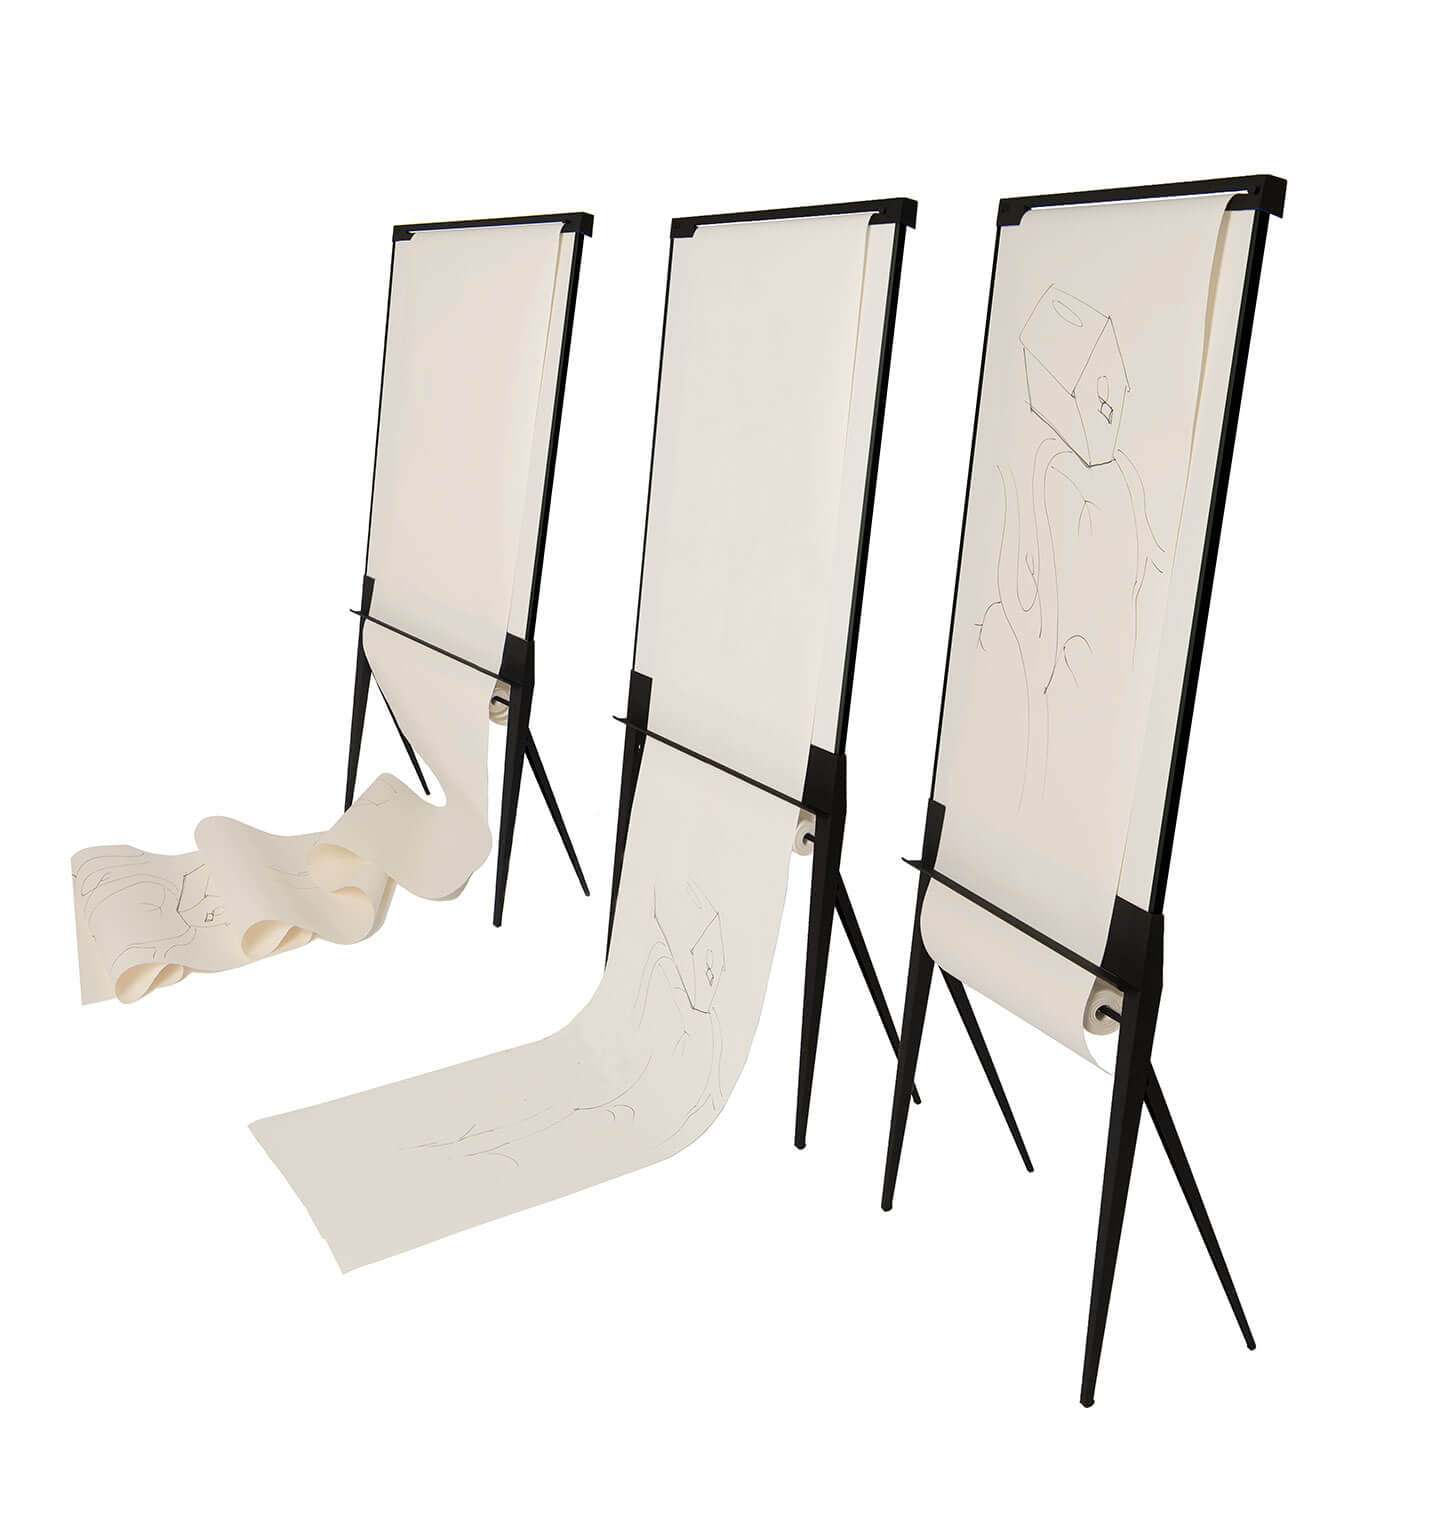 Uniek designboard STRUIS: flip-over, whiteboard met paprierrol.